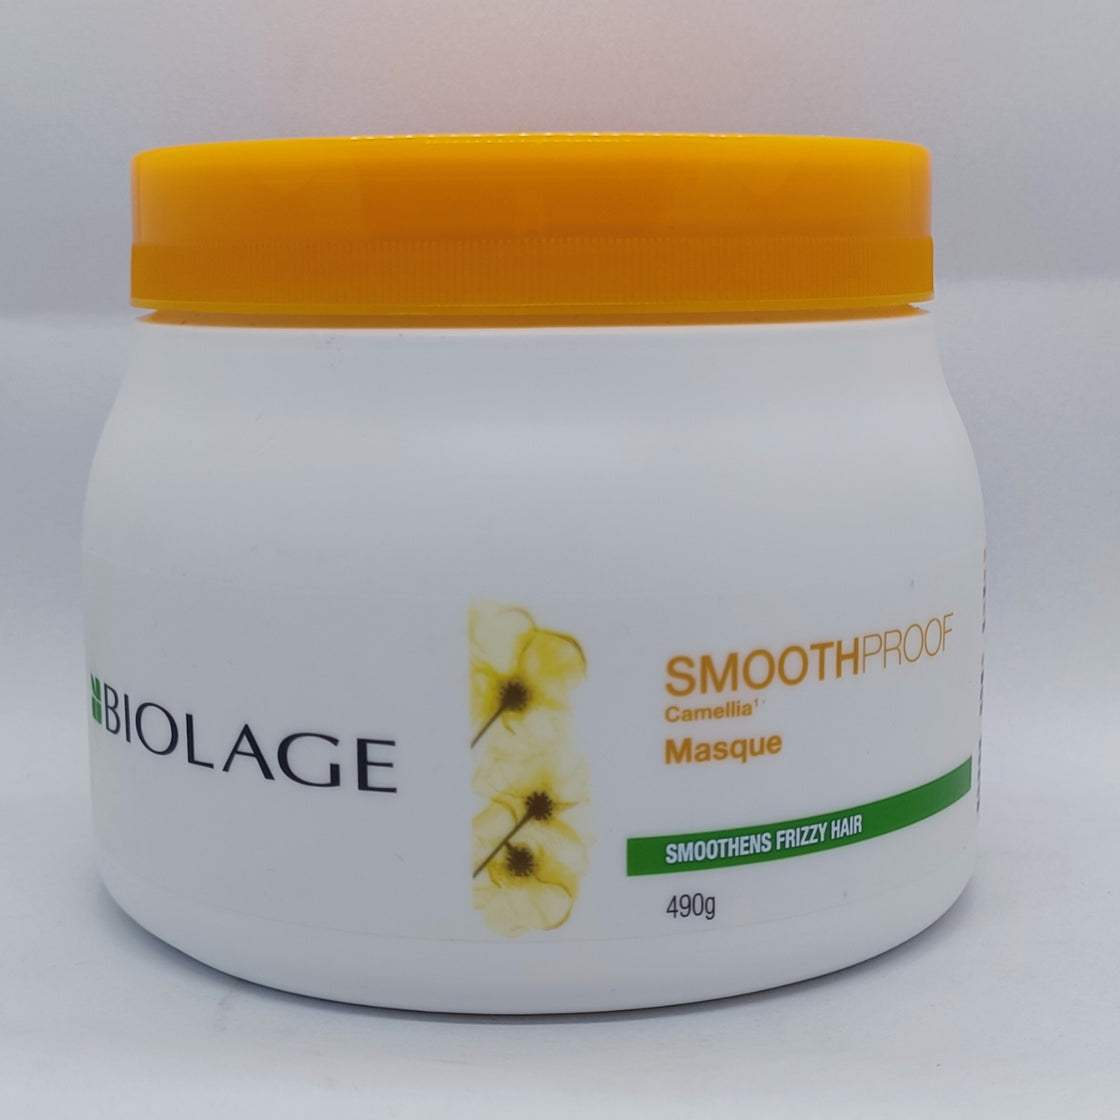 Matrix Biolage Smoothproof  Masque Smoothining Frizzy Hair(490gm)